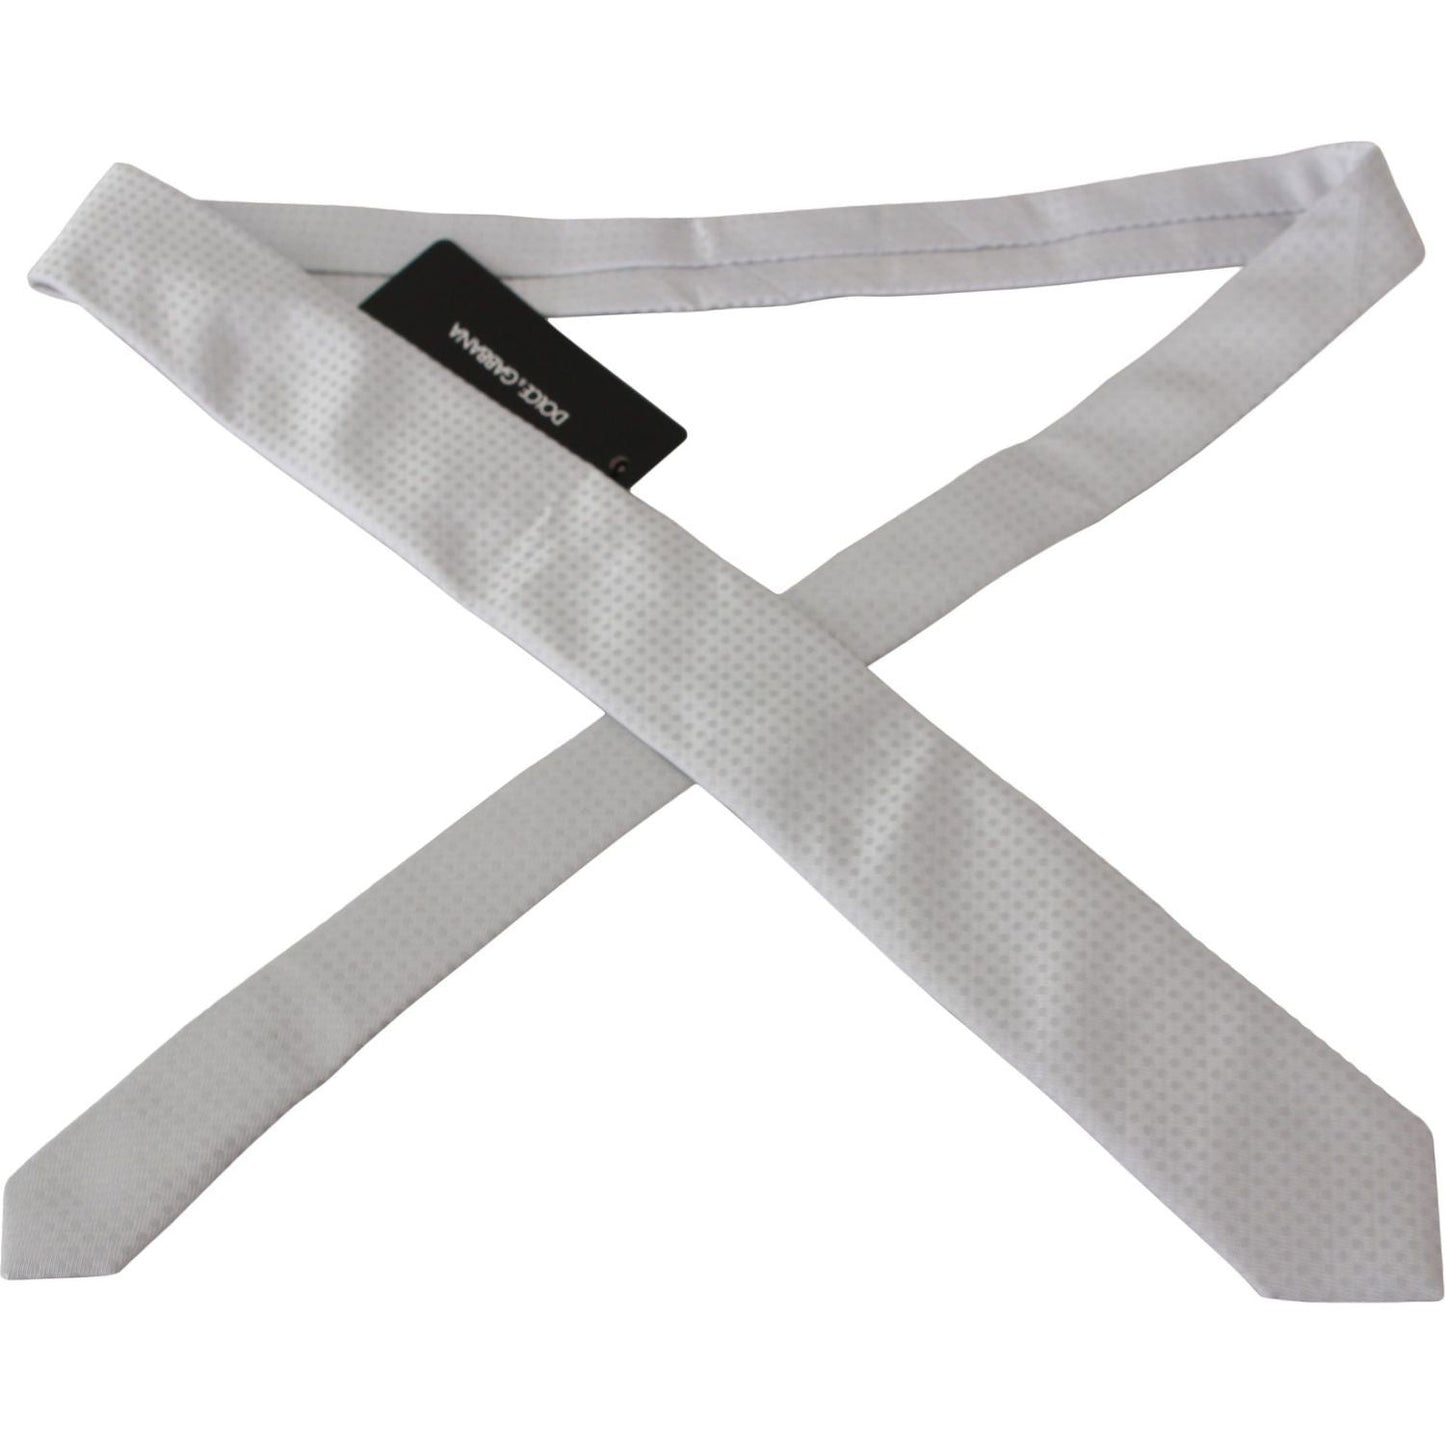 Dolce & Gabbana Elegant White Patterned Silk Blend Neck Tie white-patterned-classic-mens-slim-necktie-tie Necktie IMG_1758-scaled-17c631ae-11d.jpg